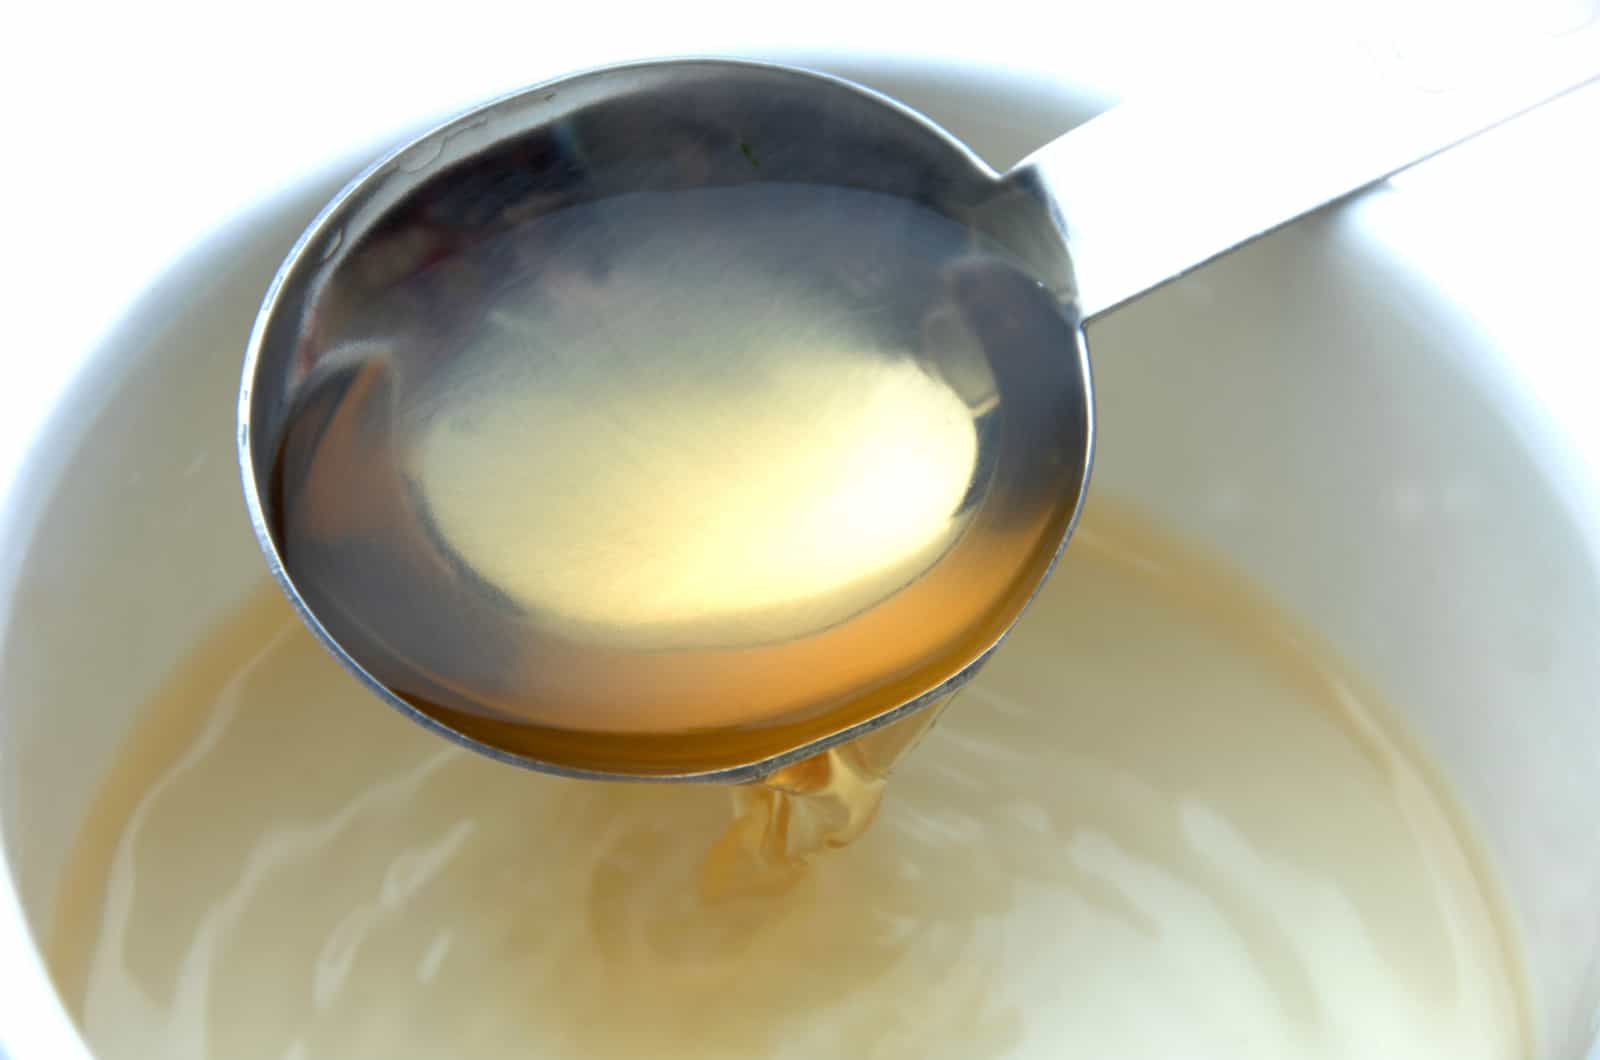 vinegar in a measuring spoon